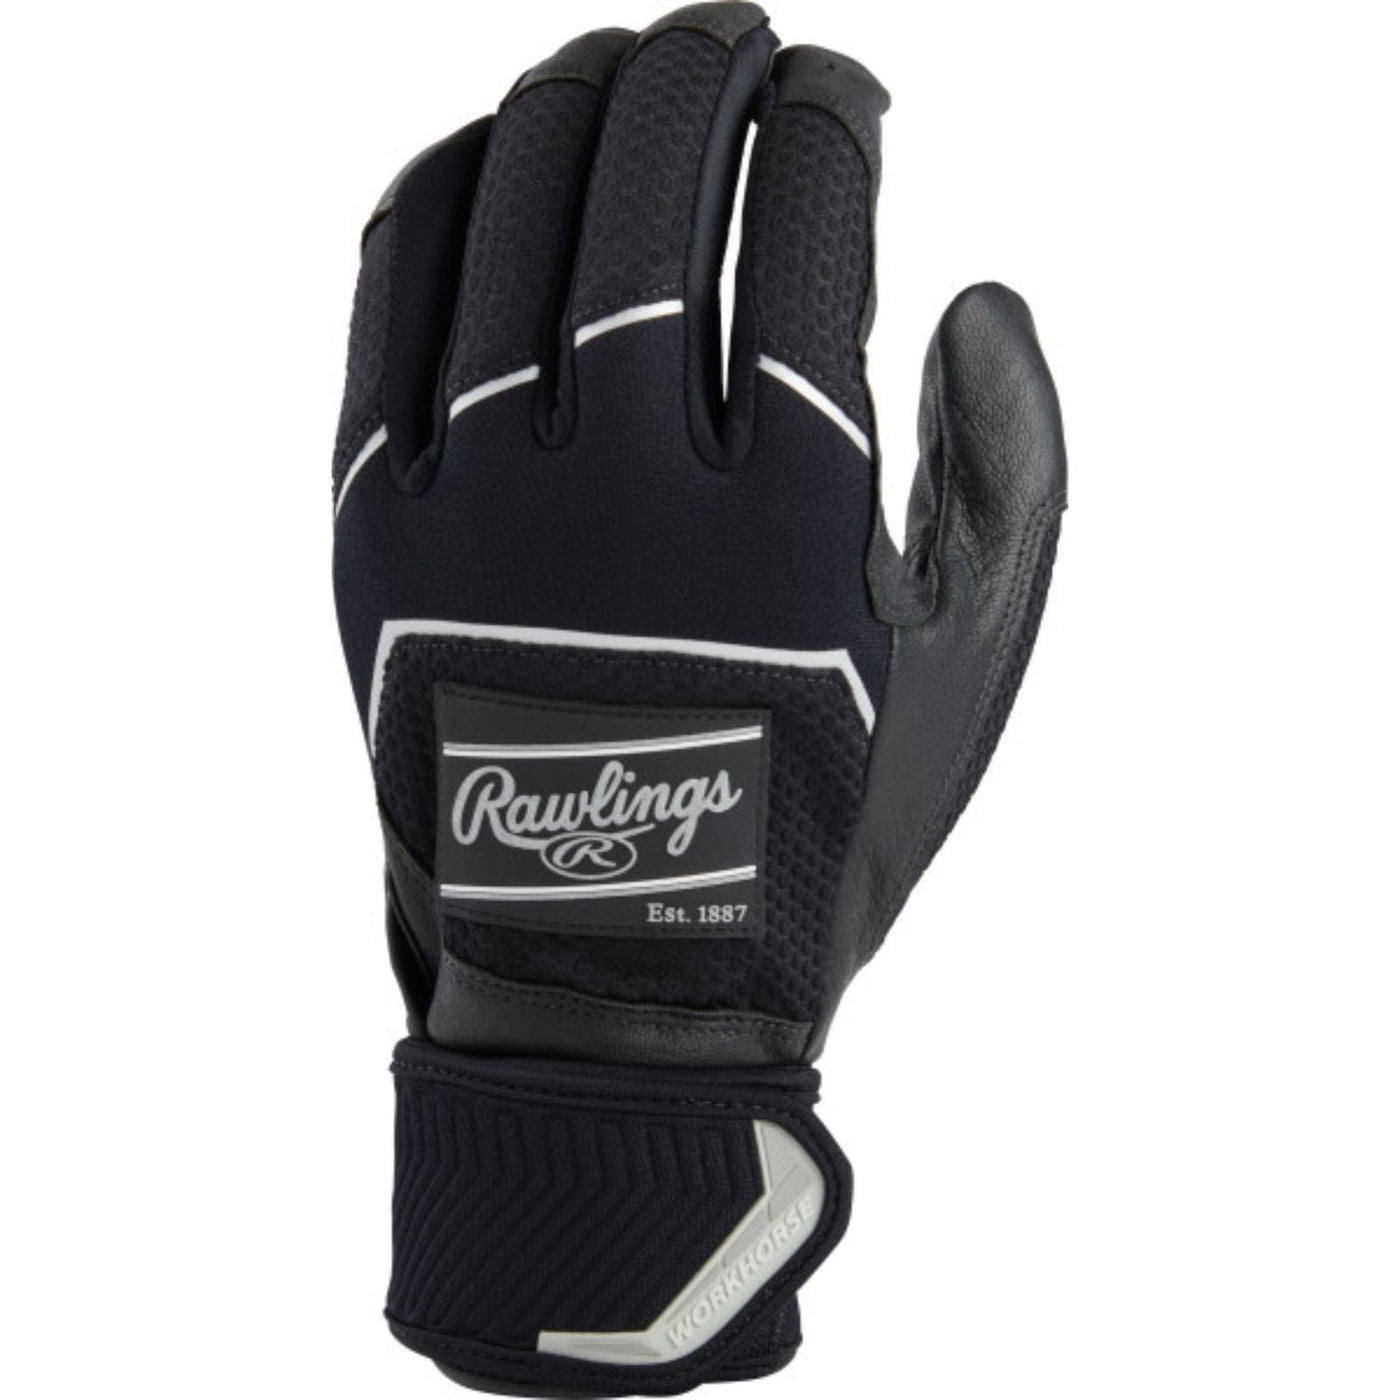 Rawlings Rawlings Workhorse Batting Glove Compression 2XL / Black Sports